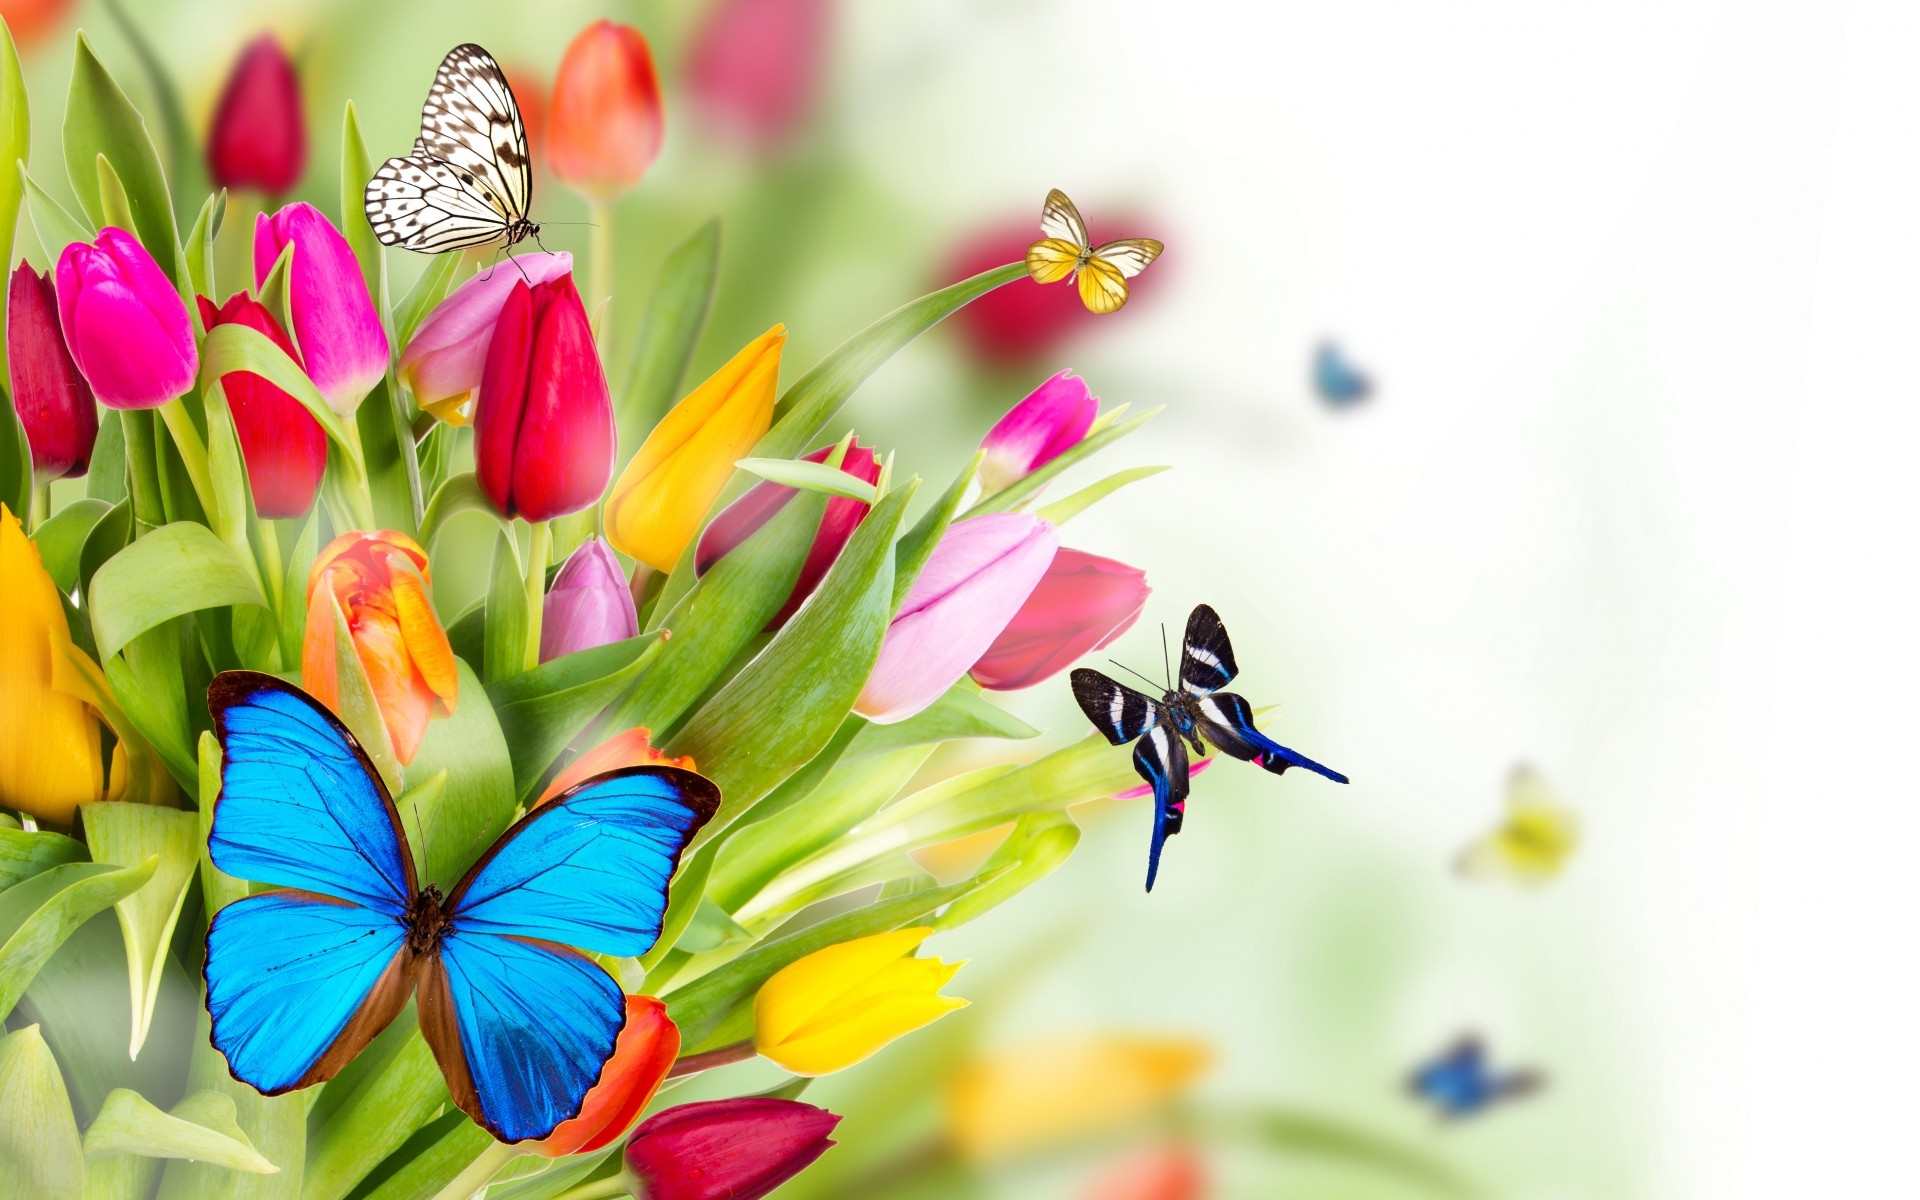 Wallpapers wallpaper butterflies tulips spring on the desktop